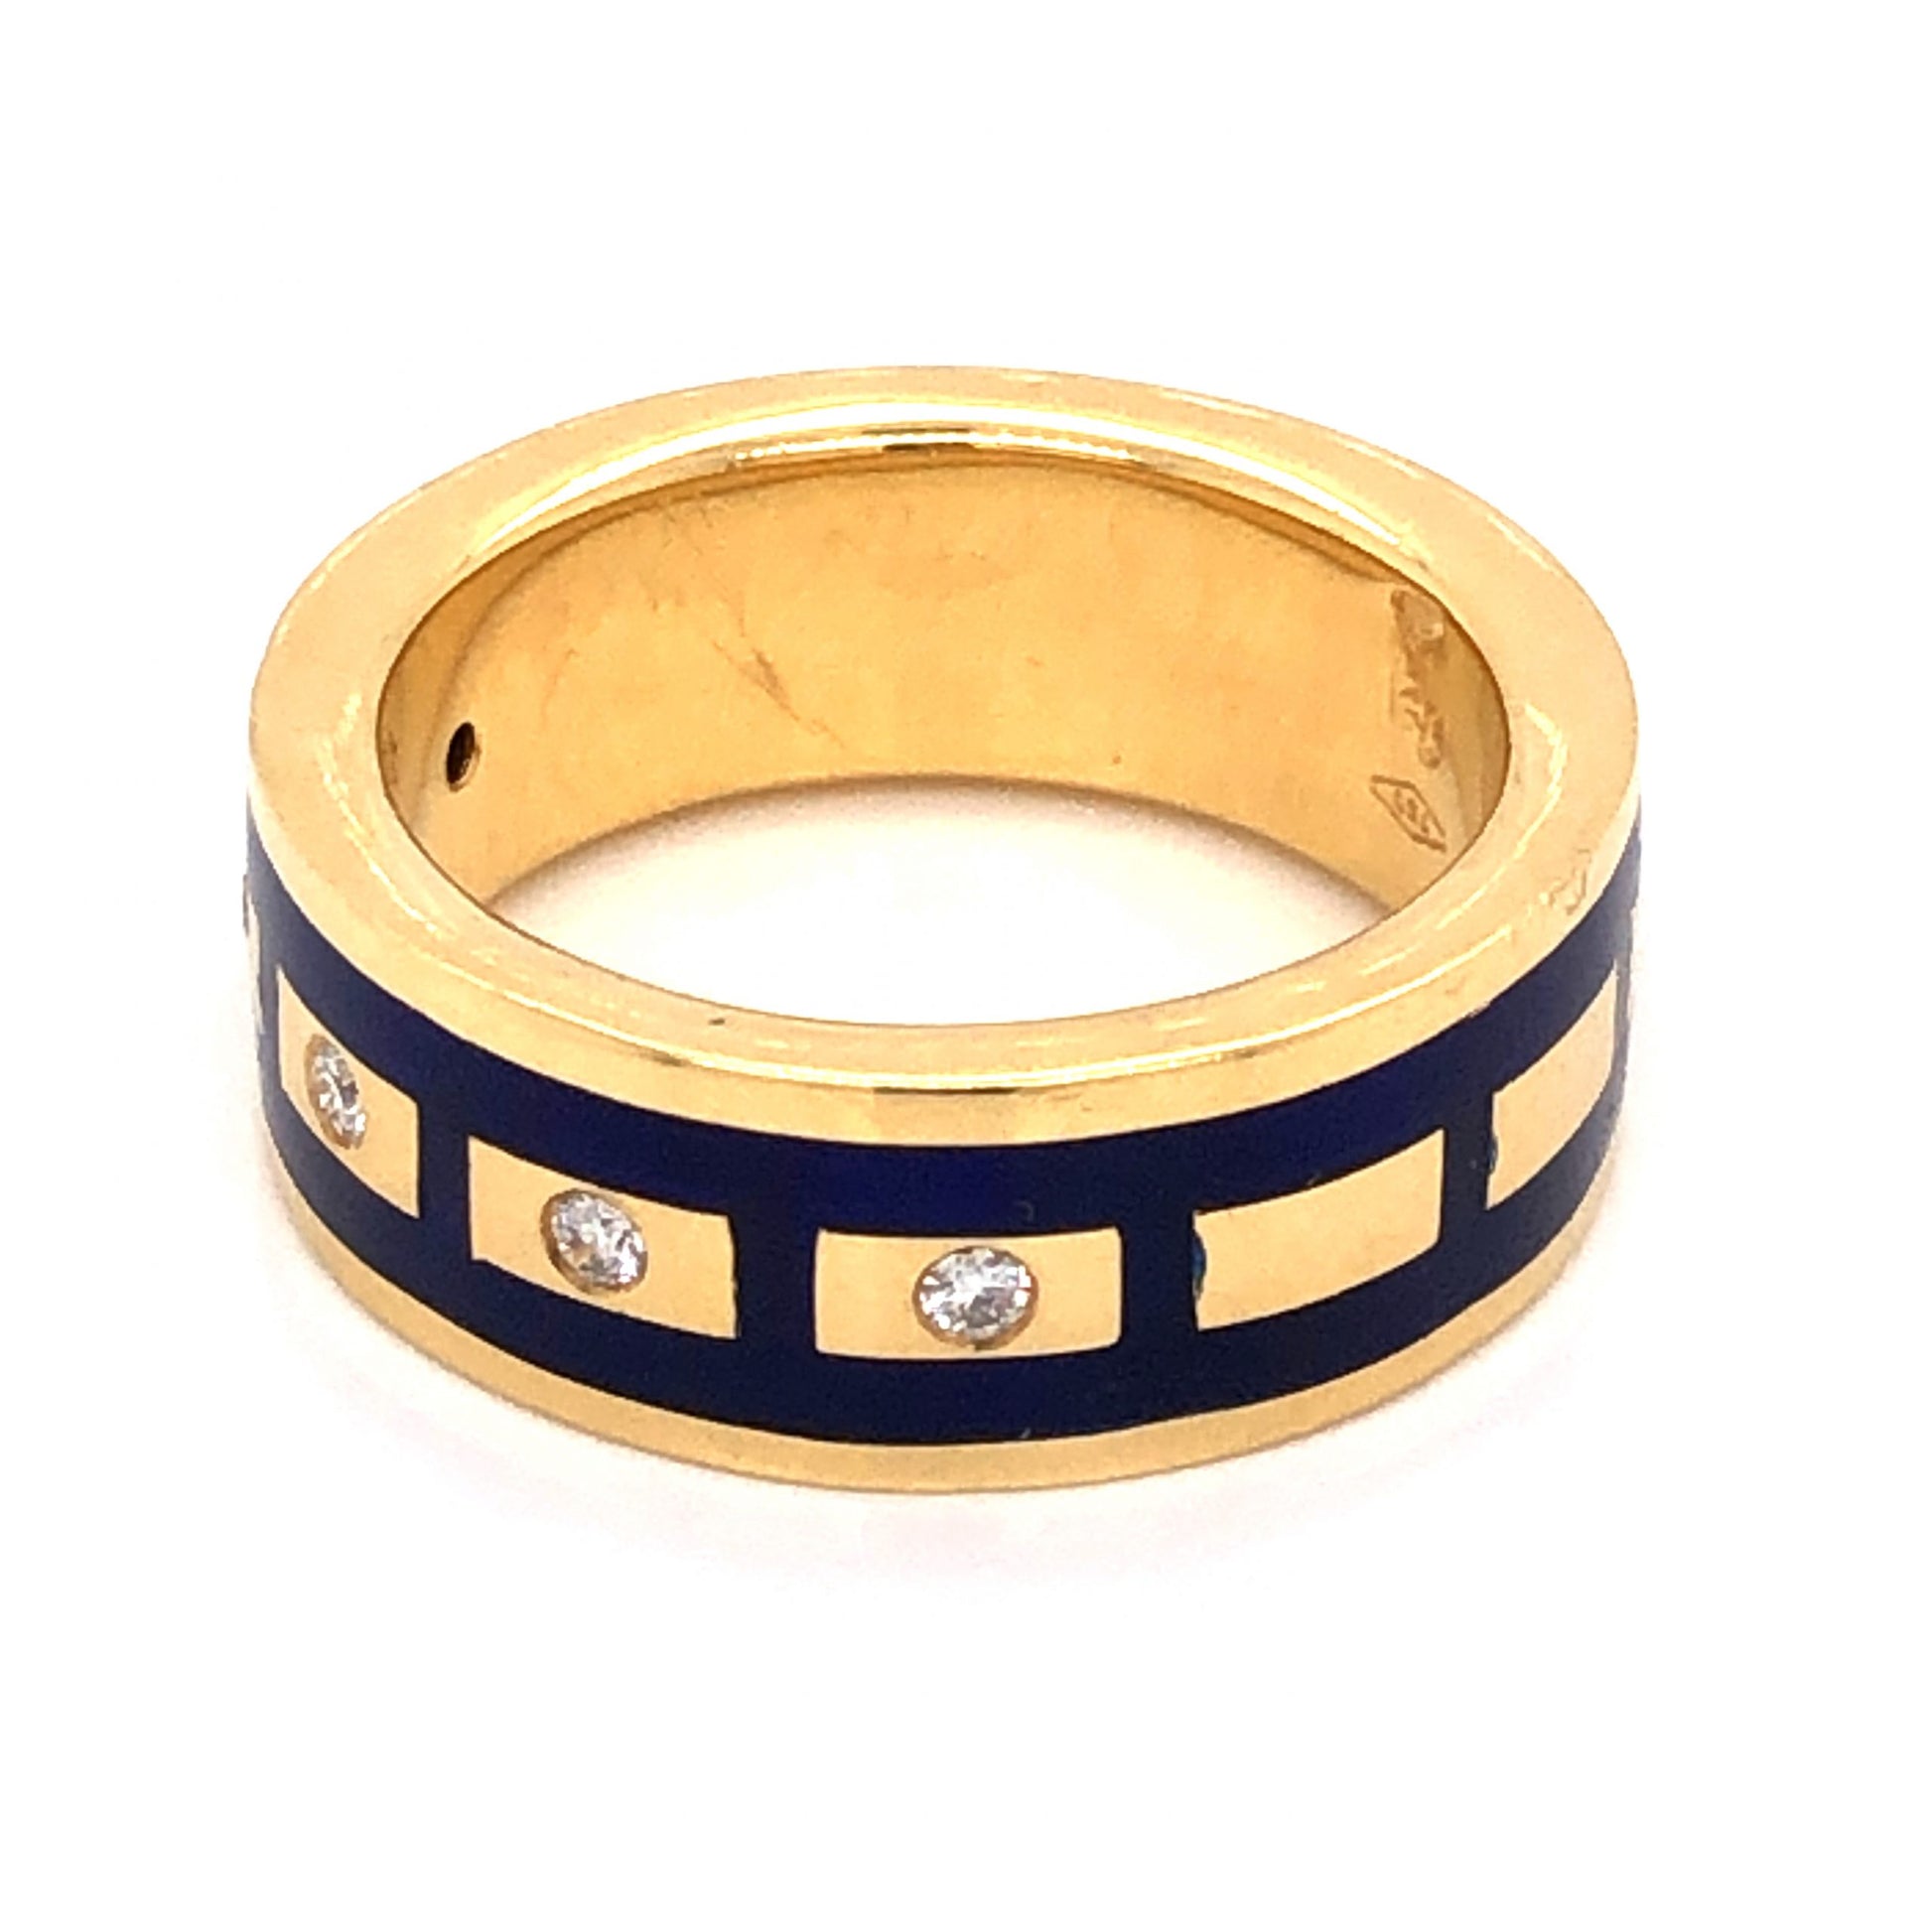 .10 Diamond Right Hand Ring in 18K Yellow Gold w/ Blue Enamel